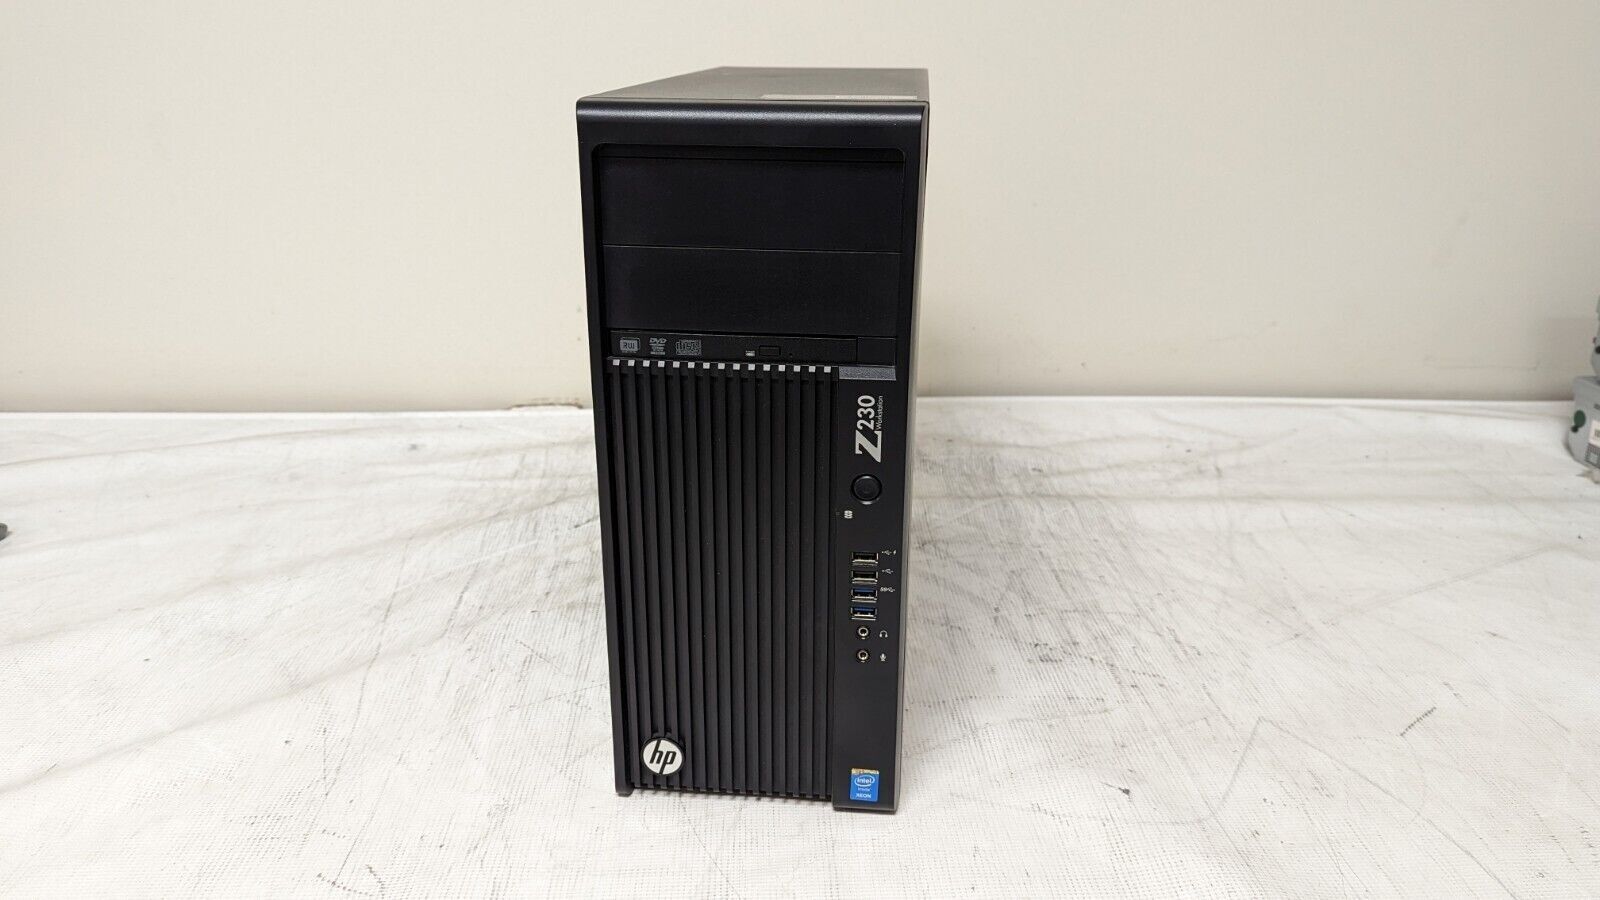 HP Z230 Tower Xeon E3-1271 v3 3.6ghz Quad Core / 8gb / 1TB SSD / Windows 10